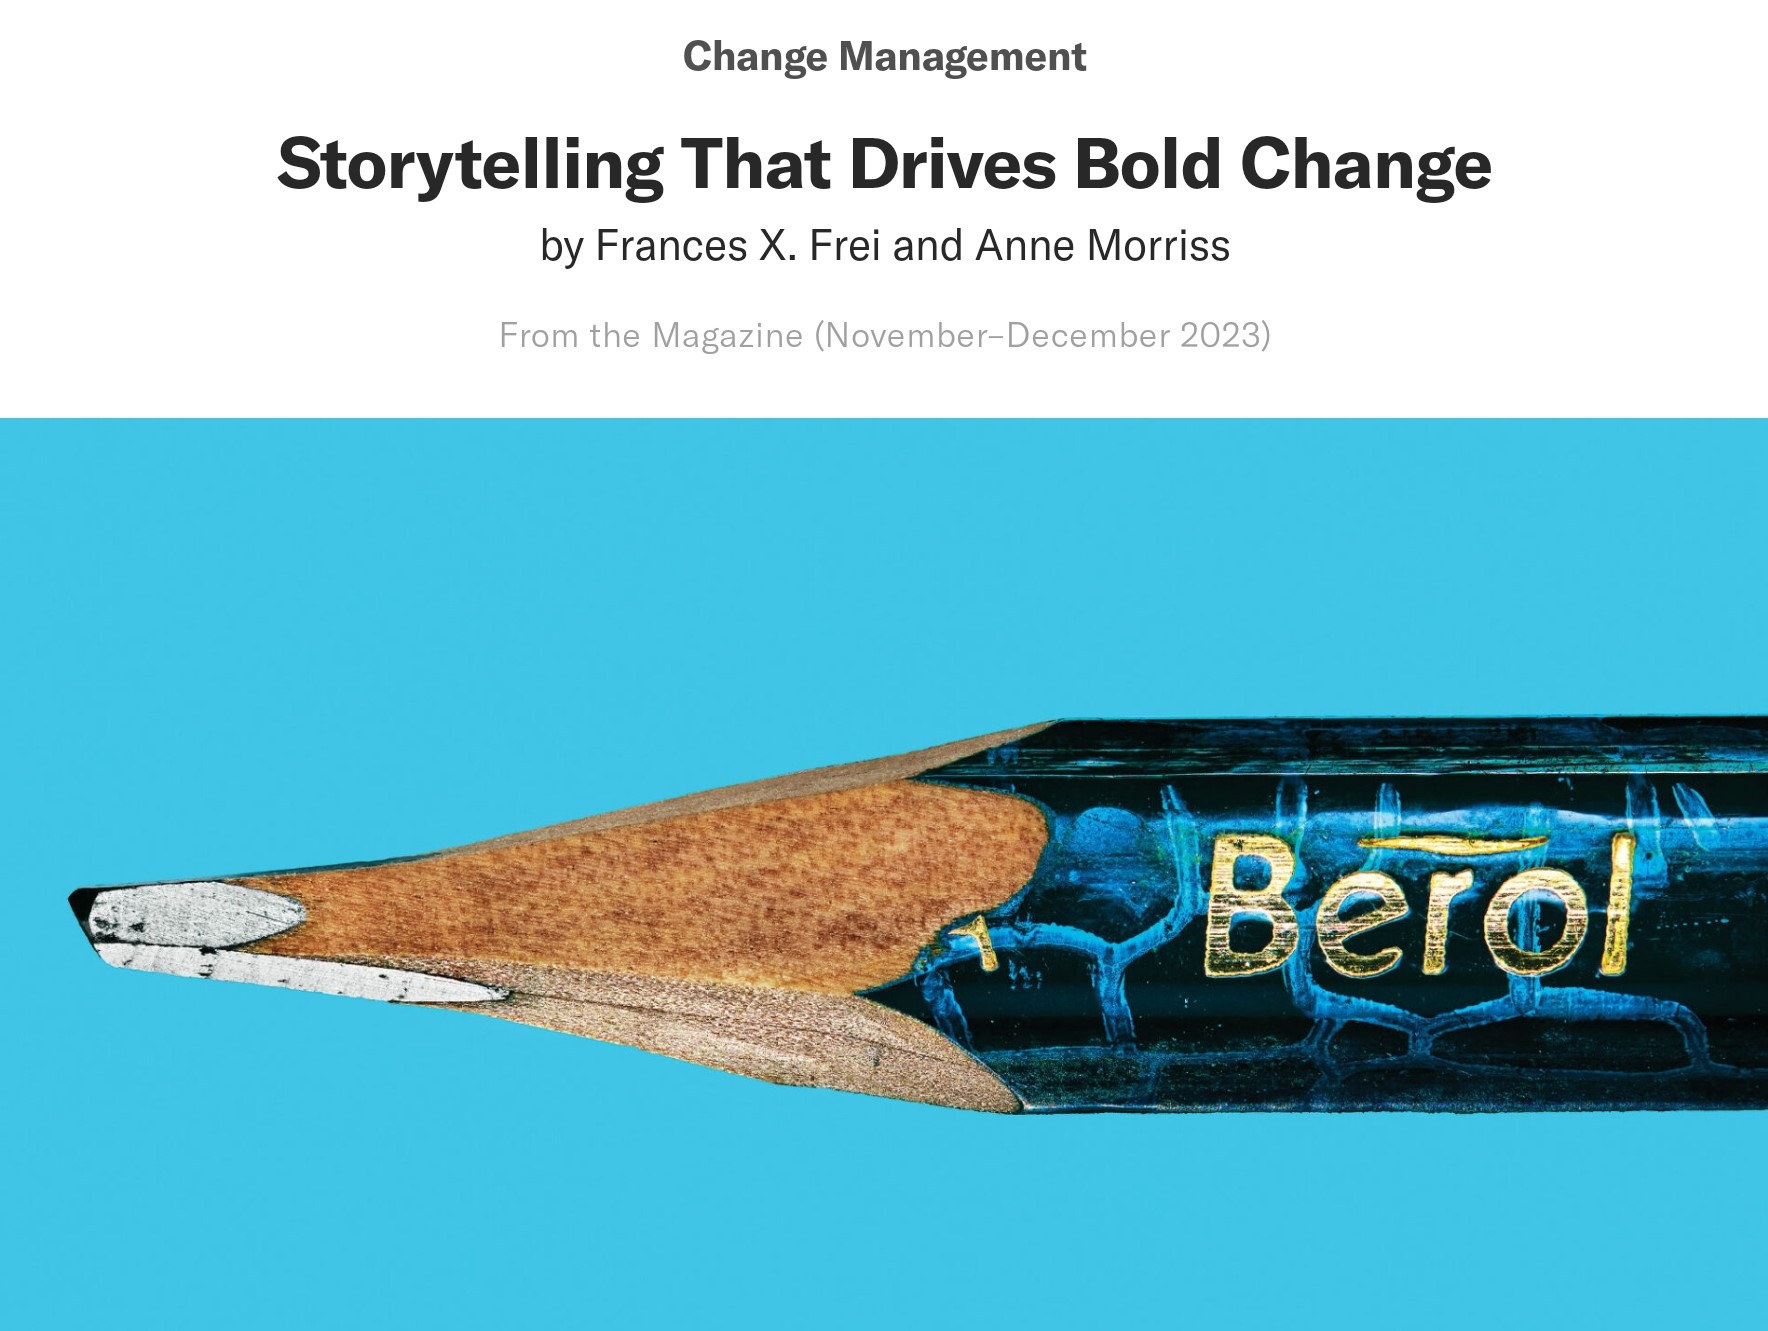 Storytelling for Bold Change